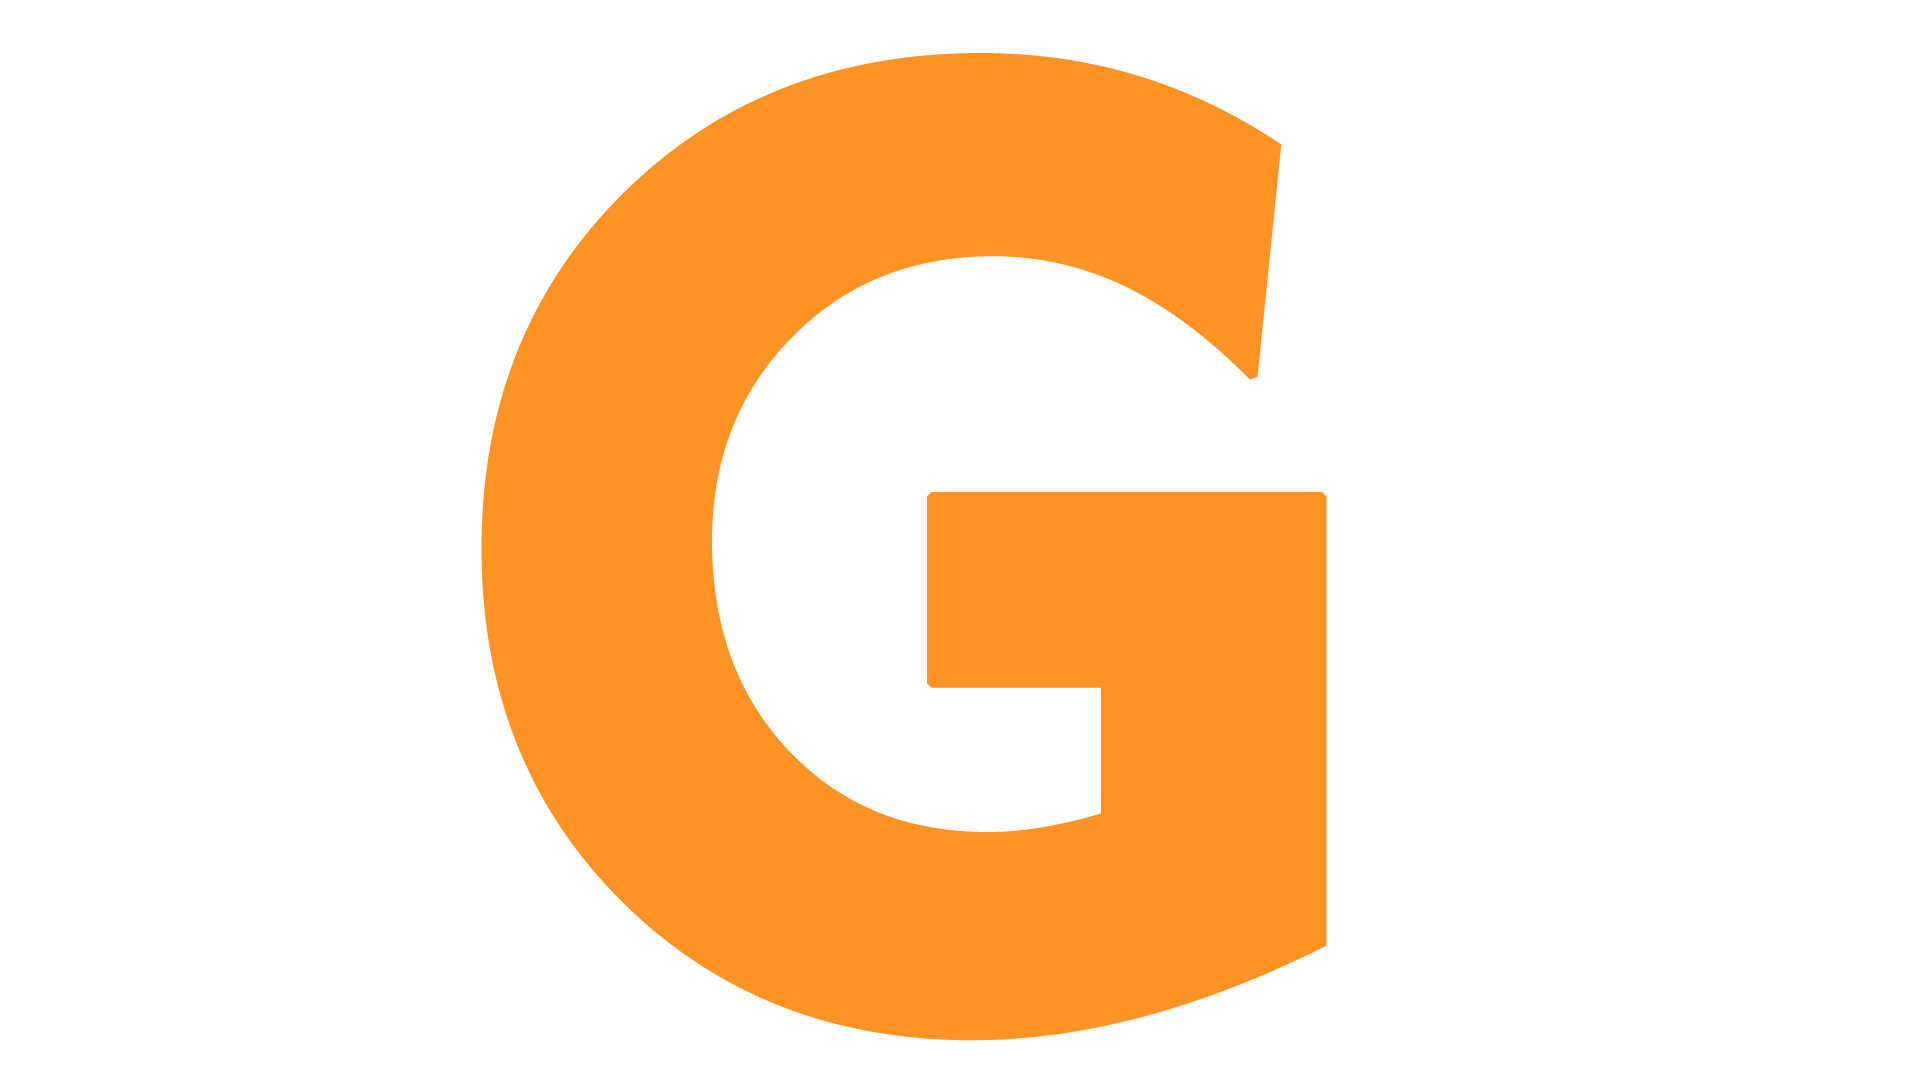 letter G PNG